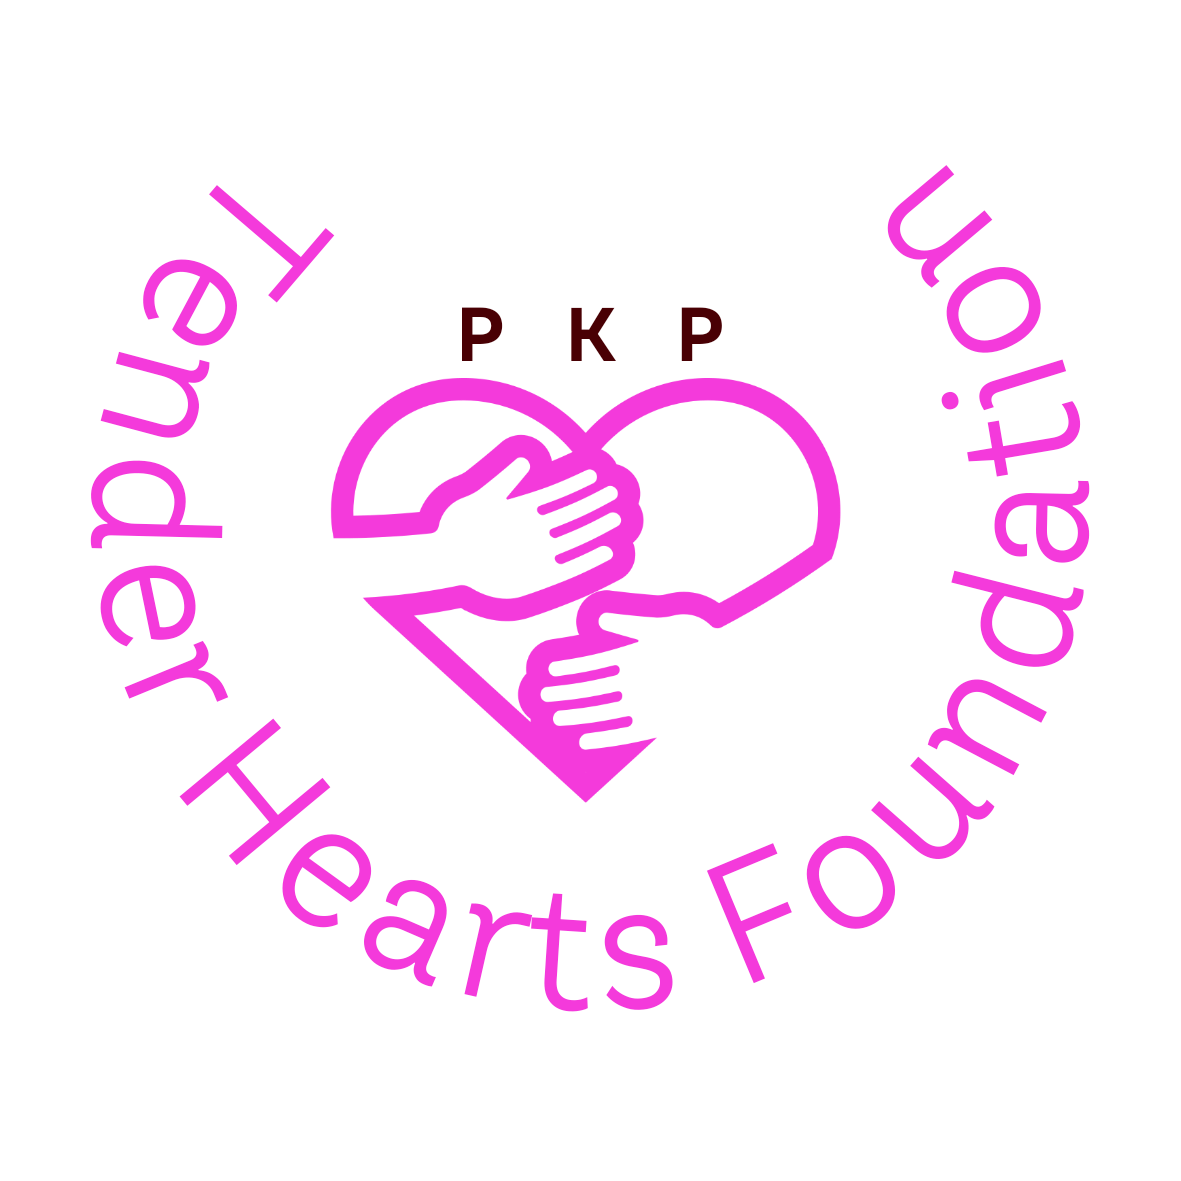 PKP Tender Hearts Foundation